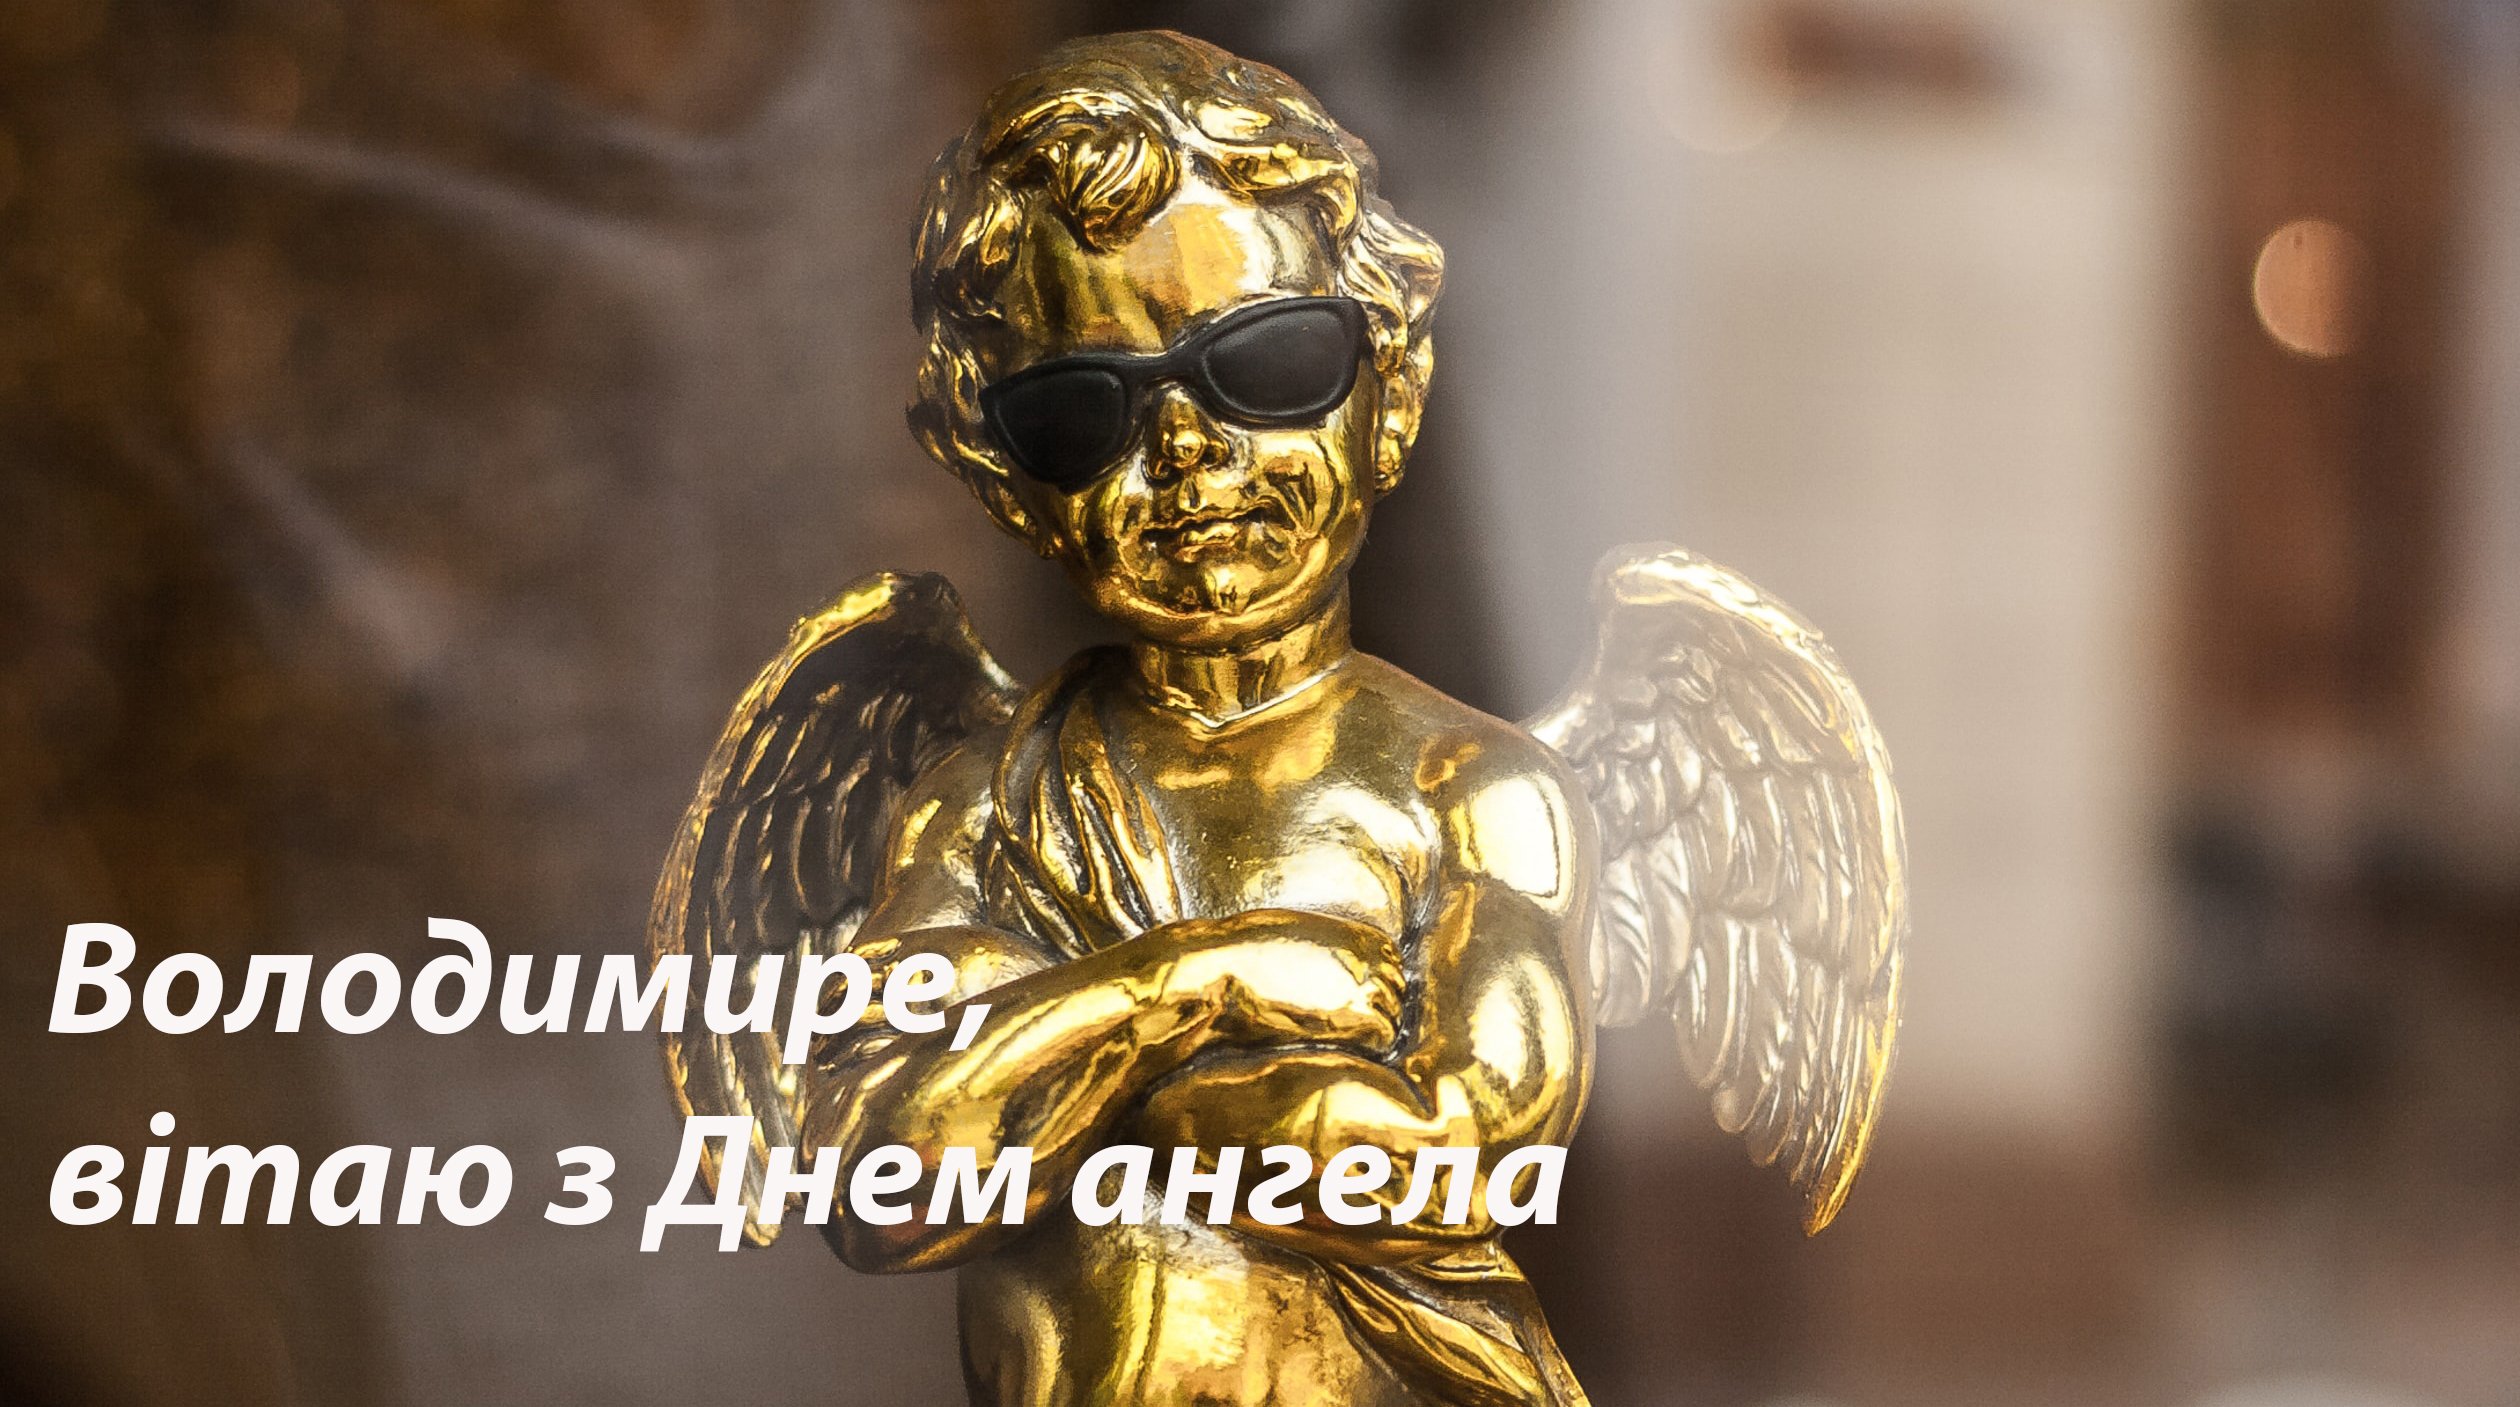 Картинки з Днем ангела Володимира 2020 - фото 486409